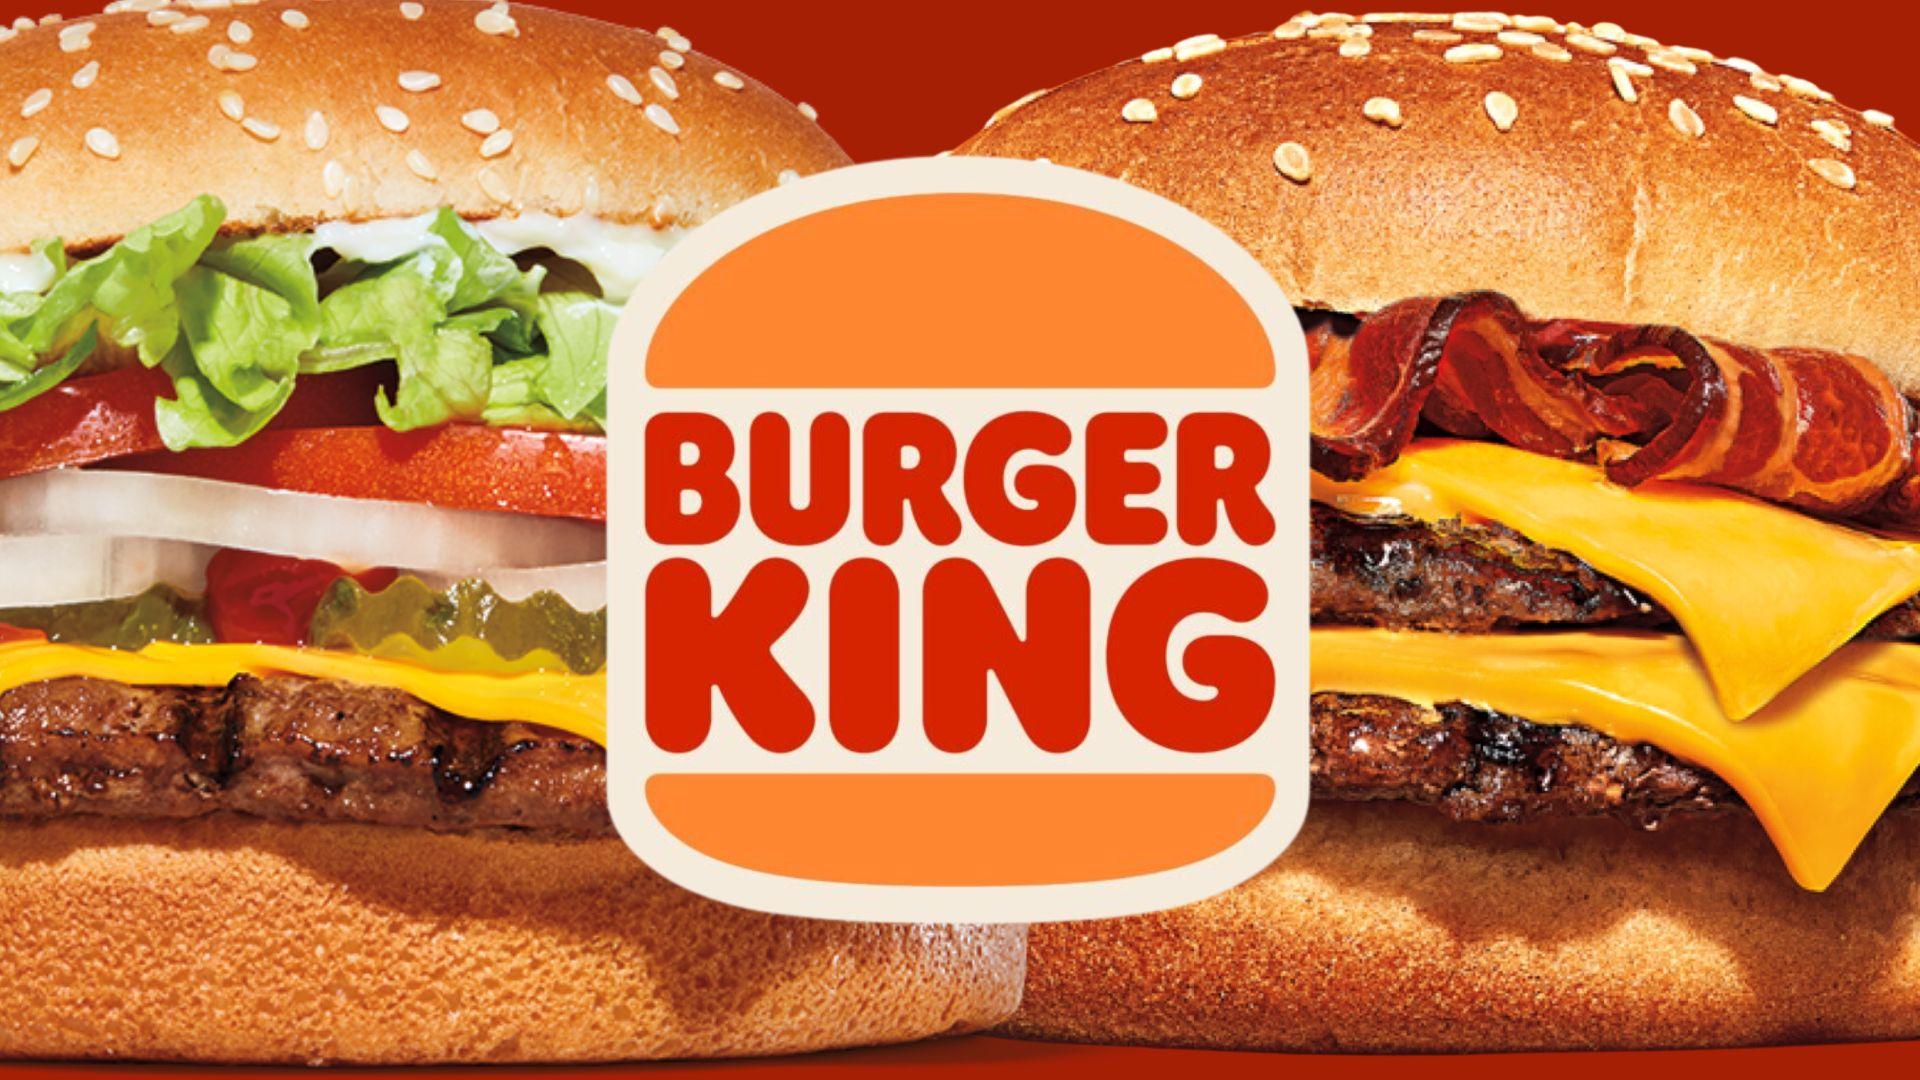 burger king logo and burgers